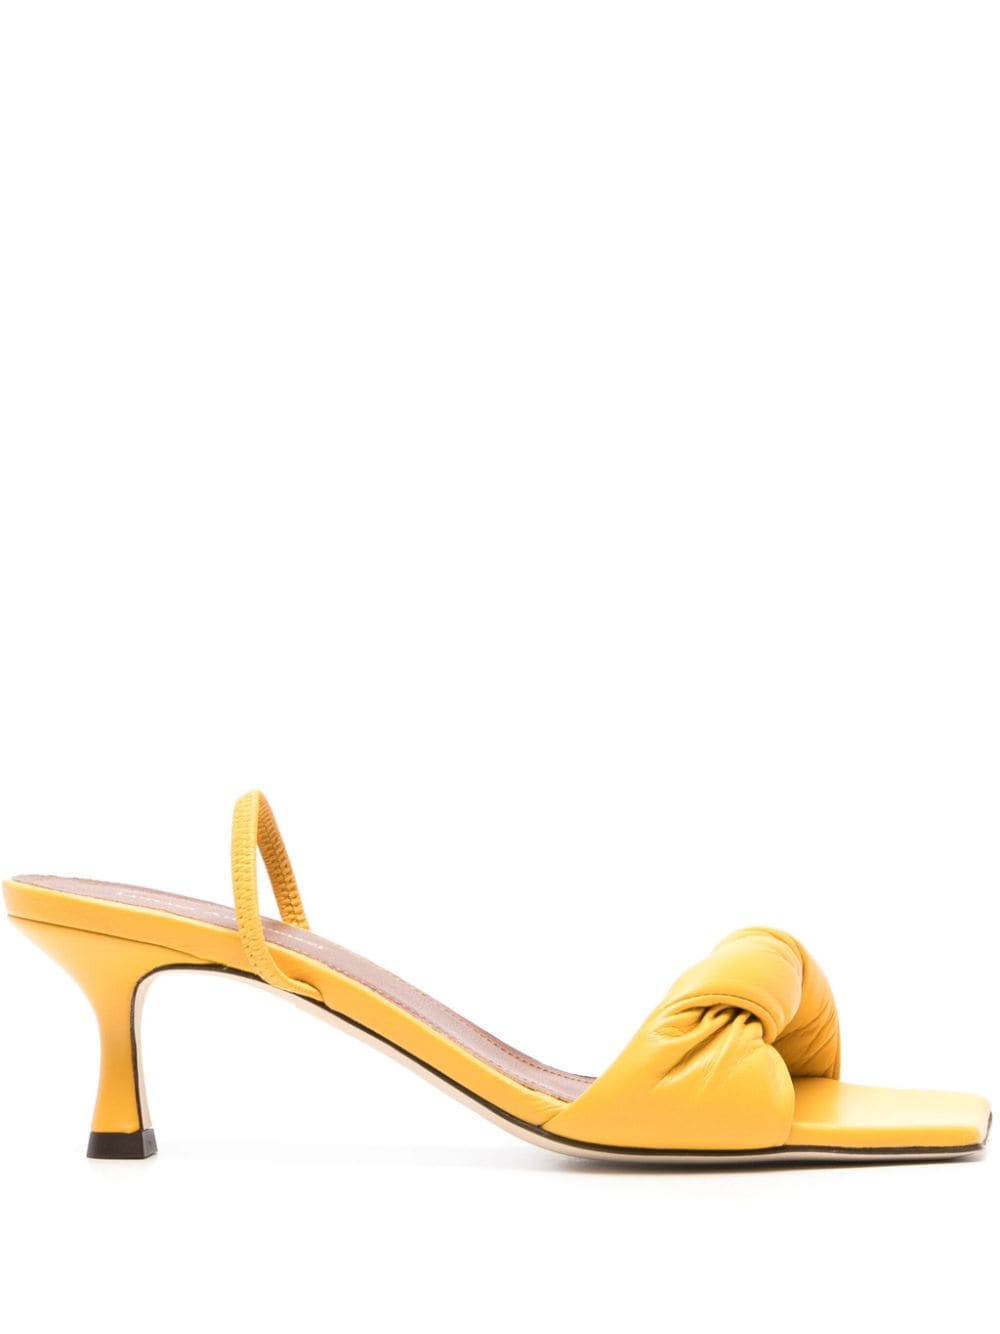 Lorena Antoniazzi twisted leather sandals - Yellow von Lorena Antoniazzi